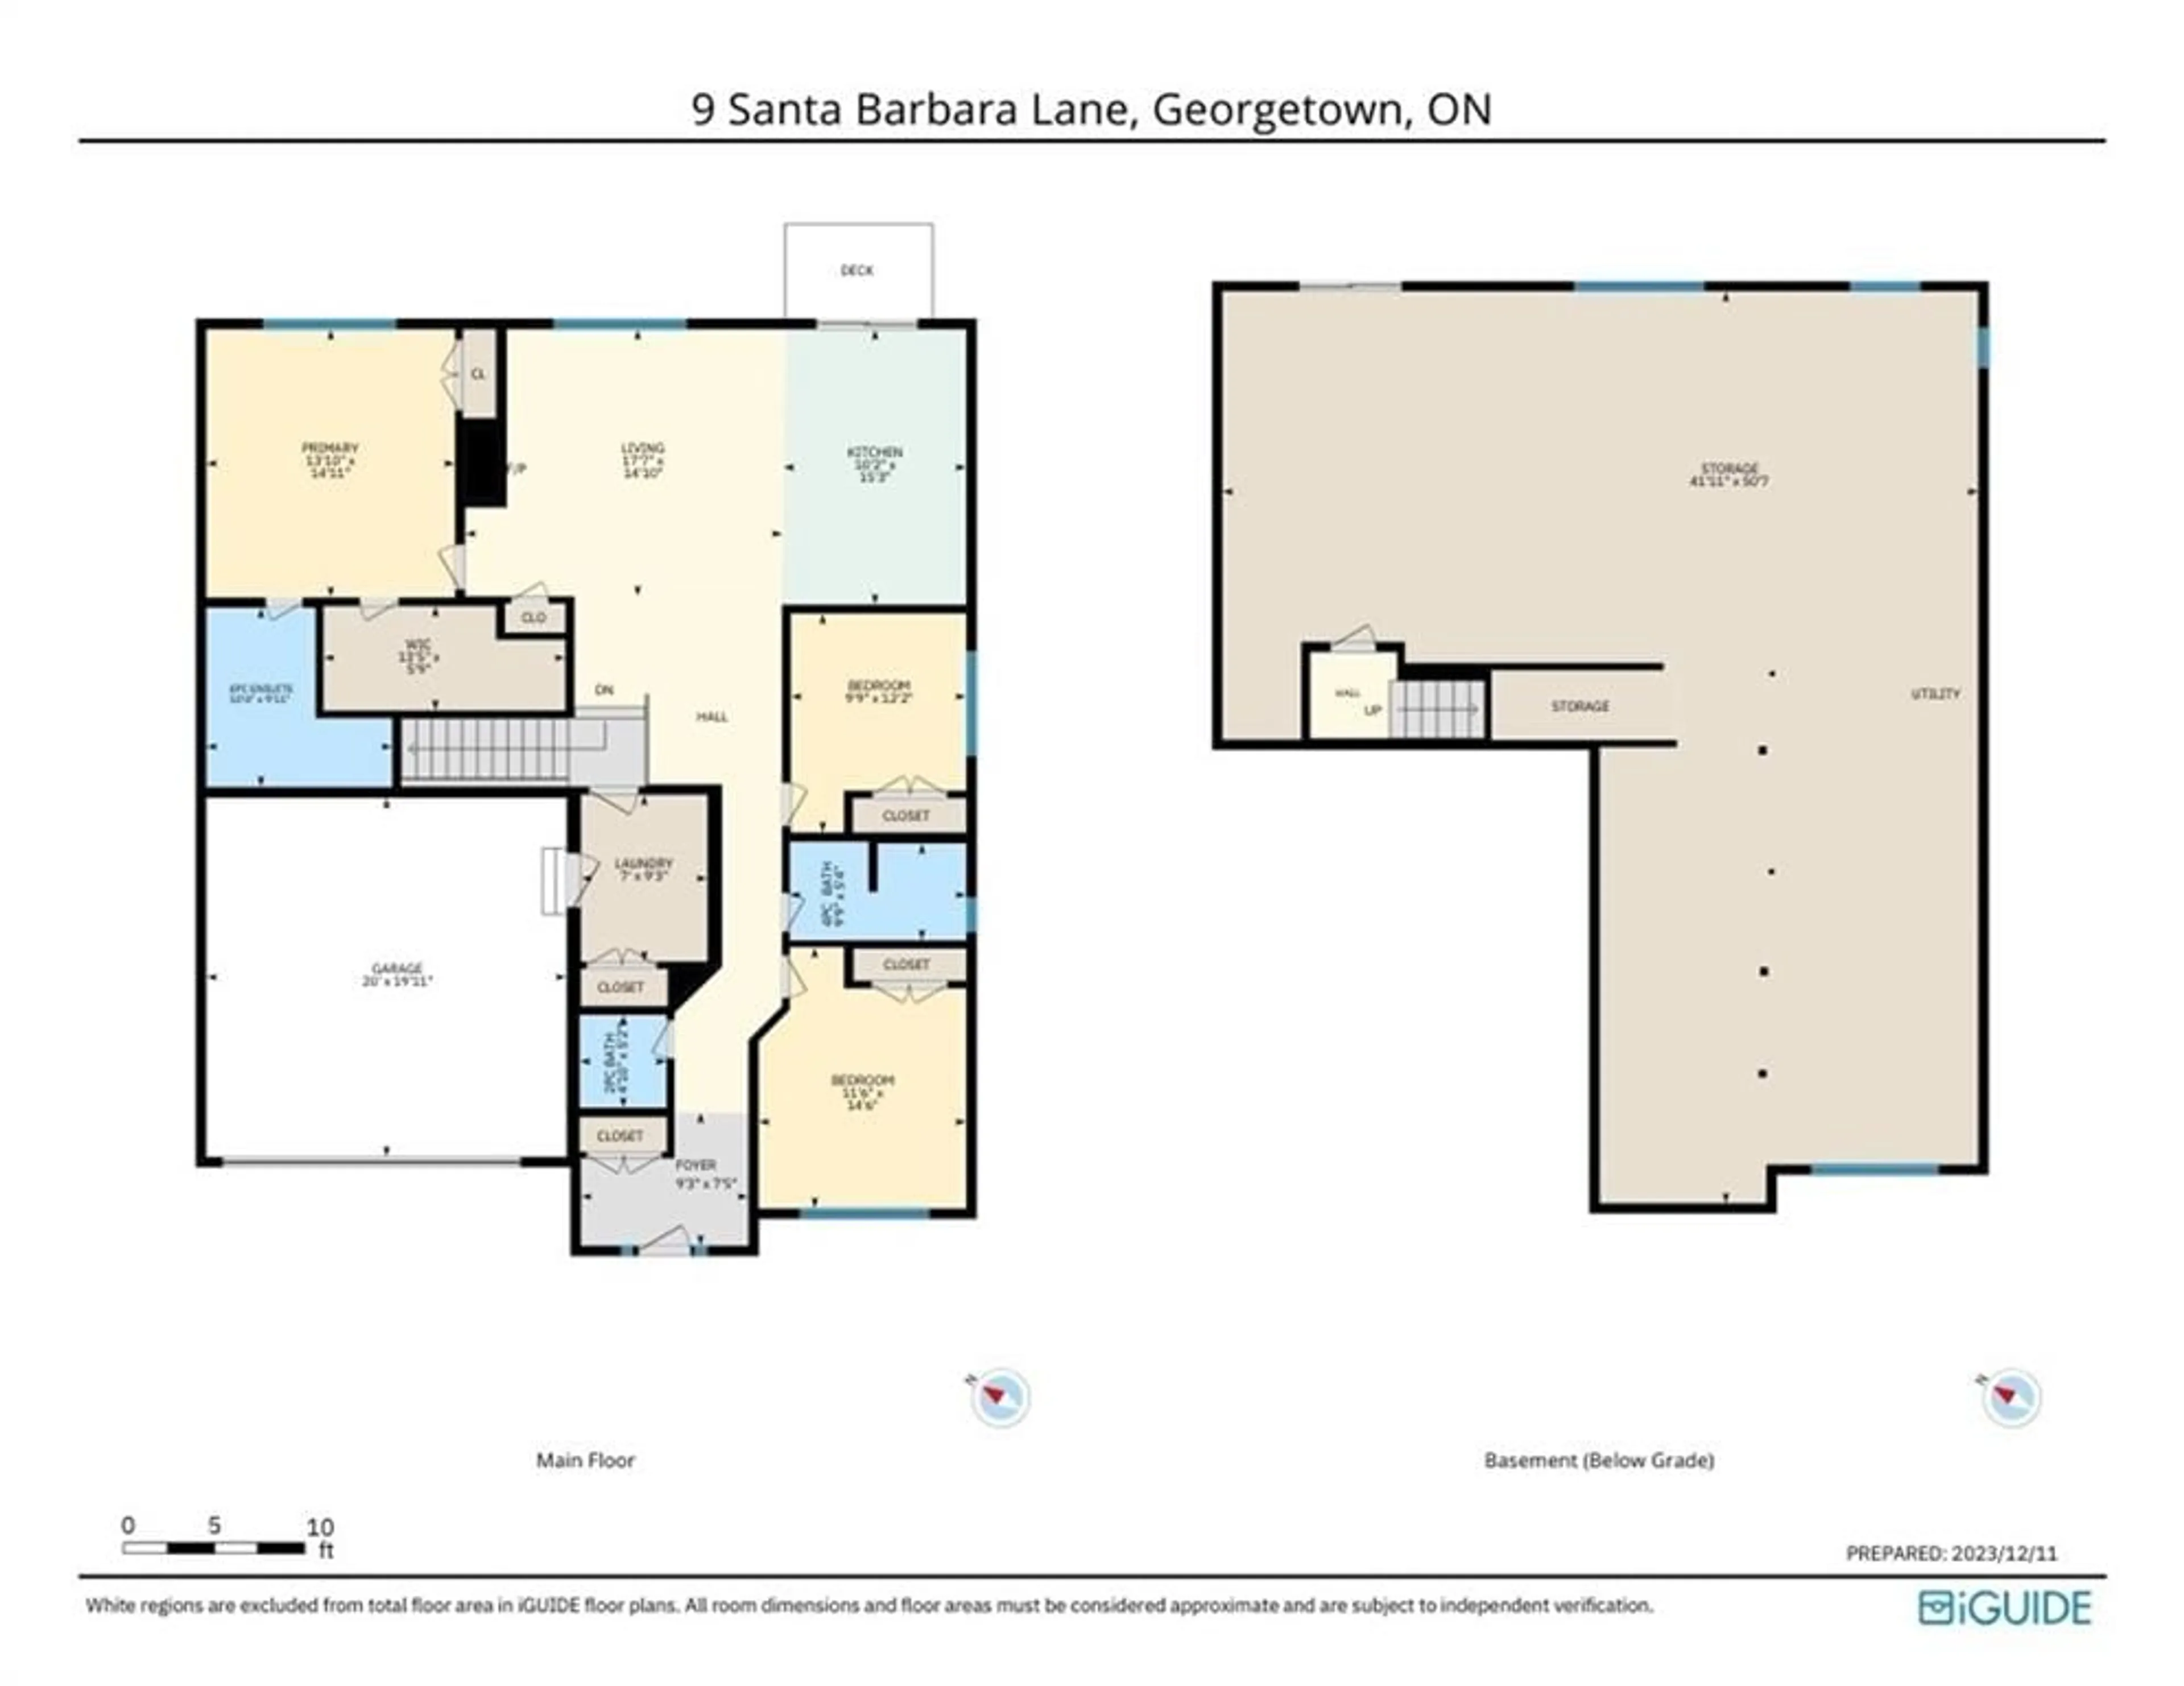 Floor plan for 9 Santa Barbara Lane, Georgetown Ontario L7G 0P7